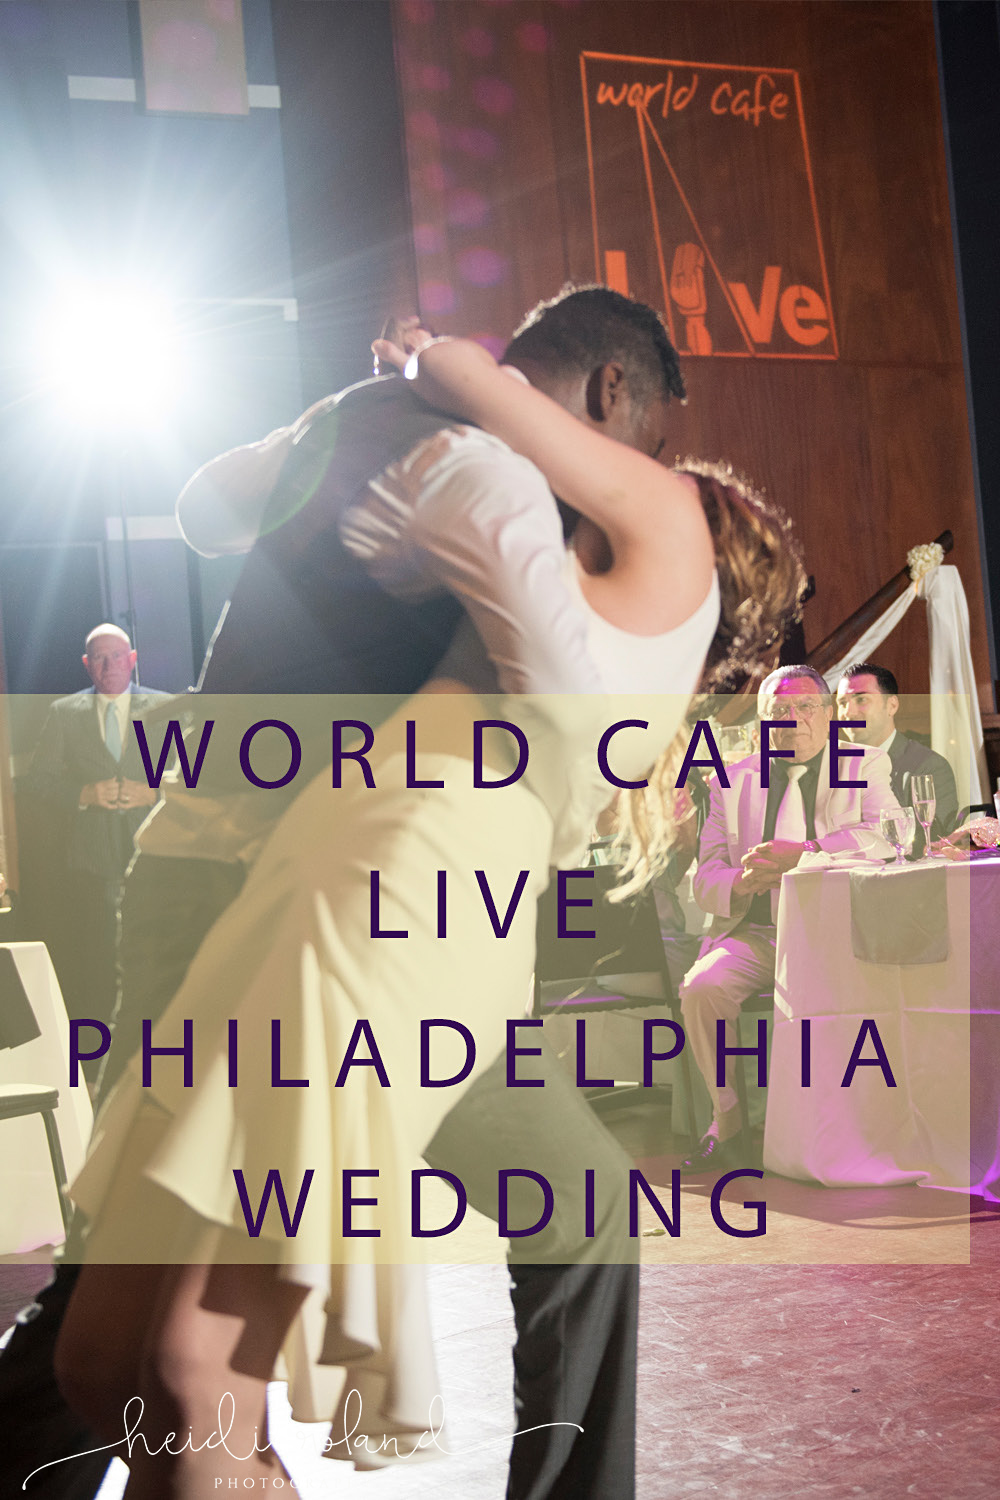 World cafe live wedding Philadelphia